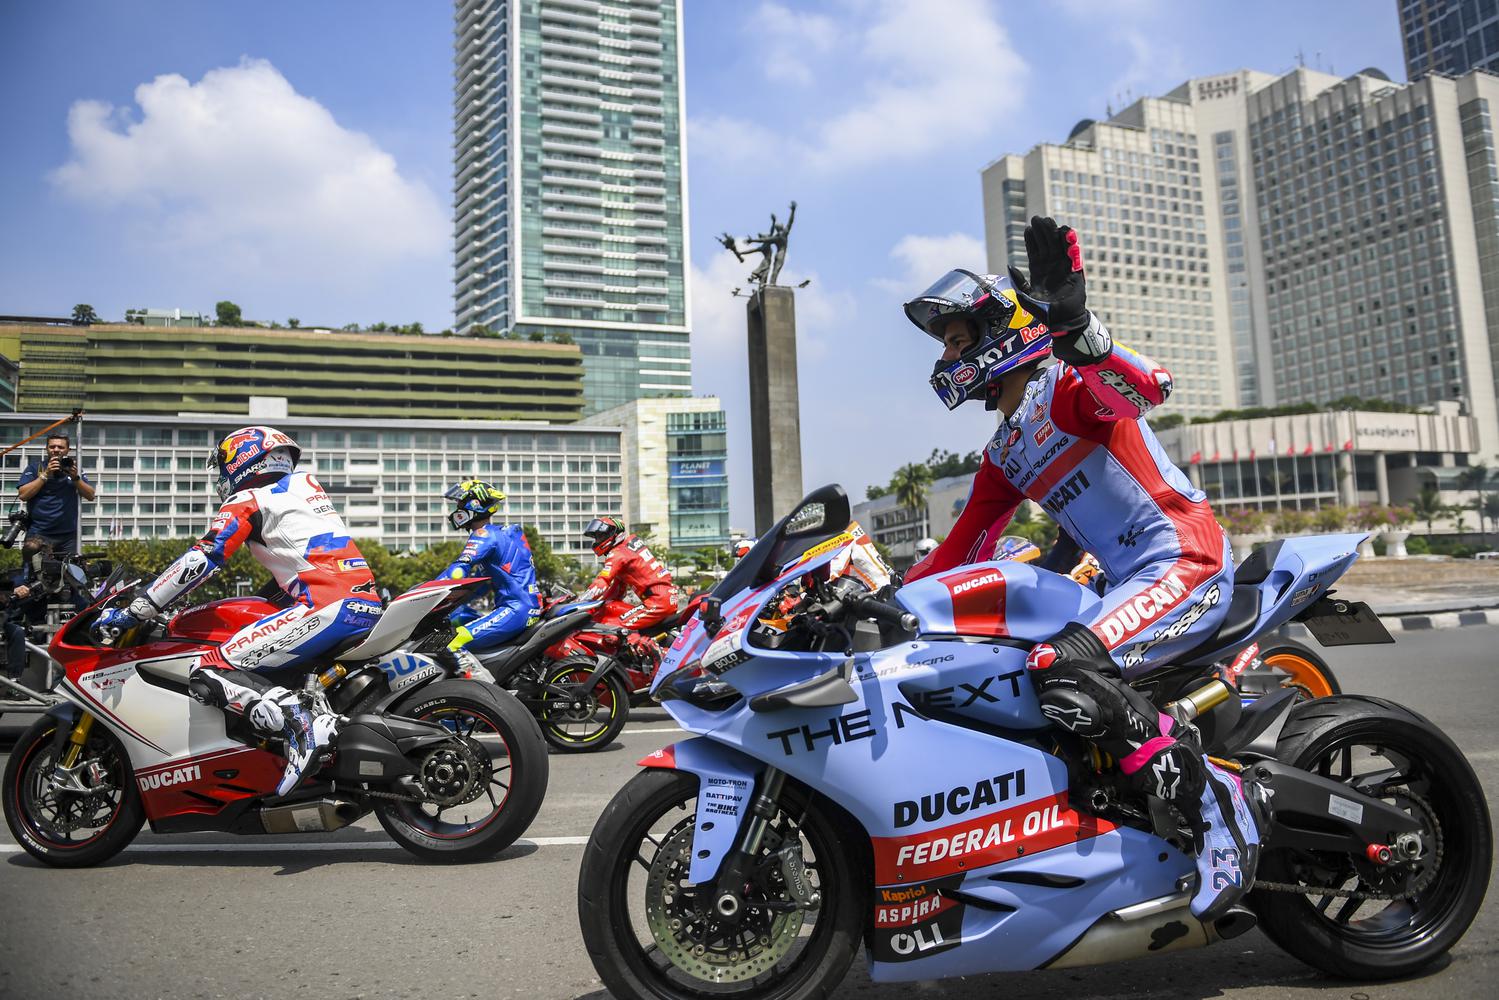 Pembalap MotoGP melakukan parade di kawasan Bundaran HI, Jakarta, Rabu (16/3/2022). Parade tersebut untuk memeriahkan pagelaran MotoGP seri kedua Pertamina Grand Prix of Indonesia di Pertamina Mandalika International Street Circuit pada 18 - 20 Maret 2022.